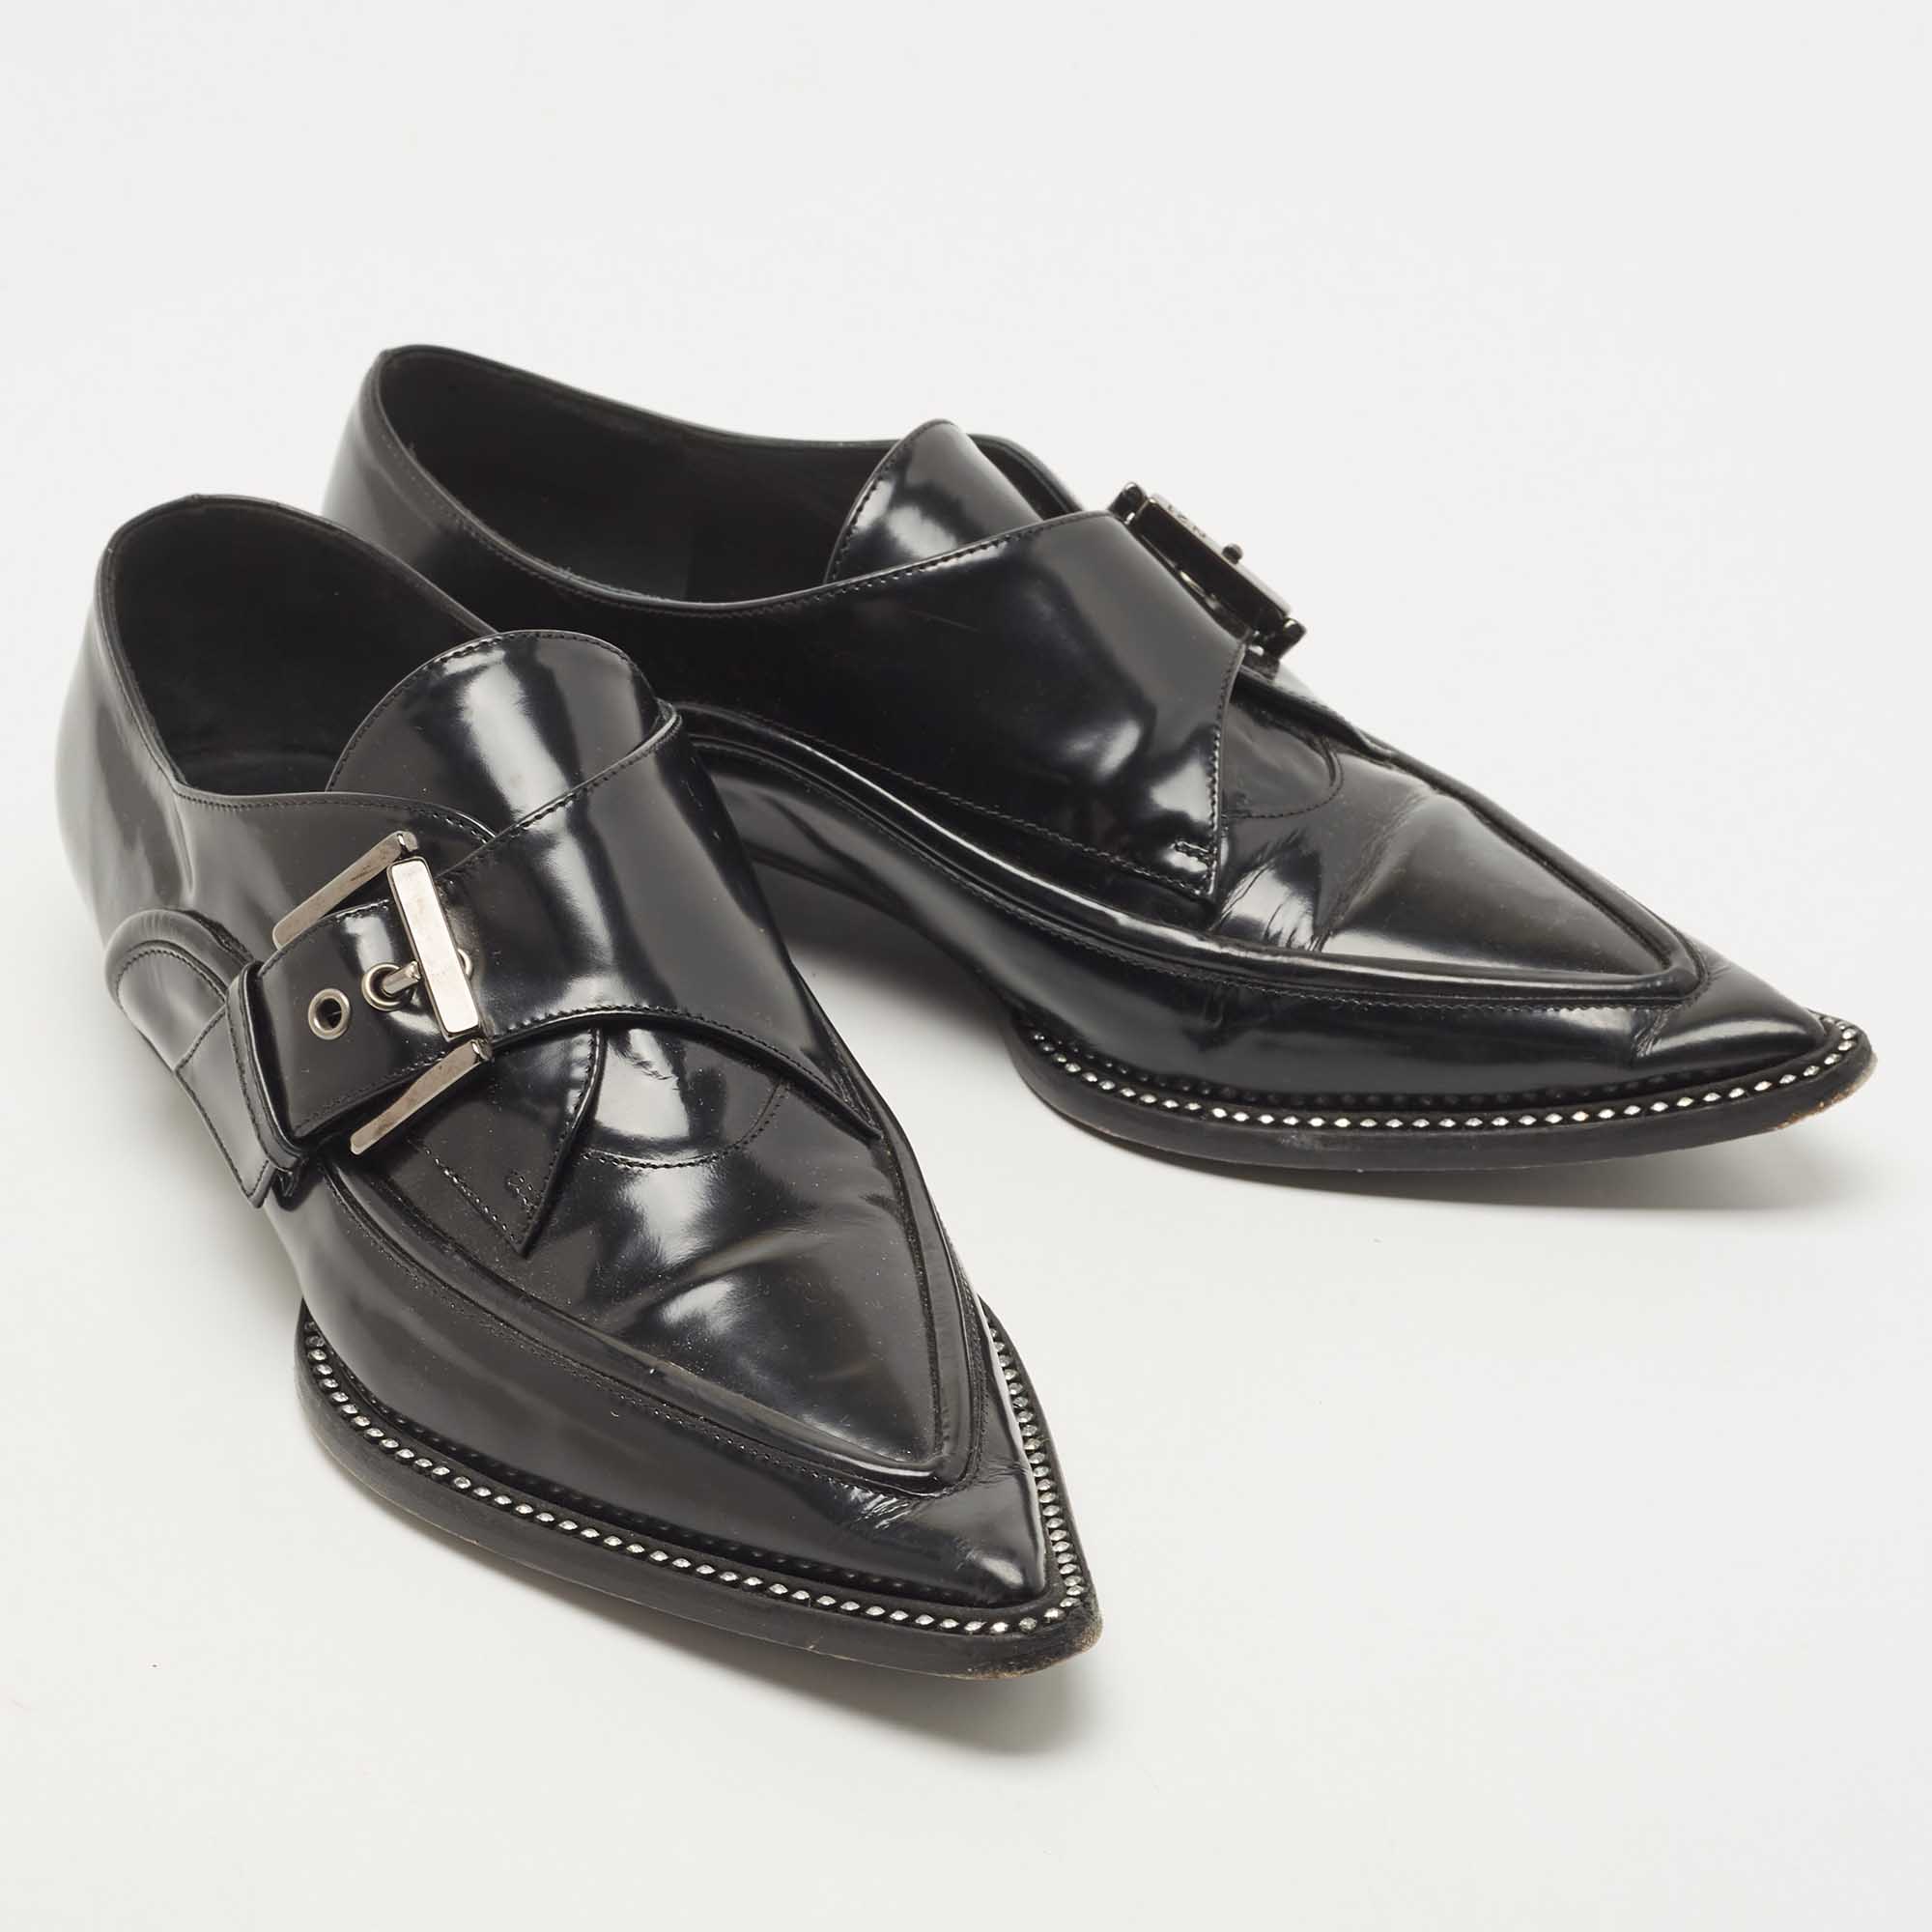 N21 Black Leather Crystal Embellished Buckle Loafers Size 38.5